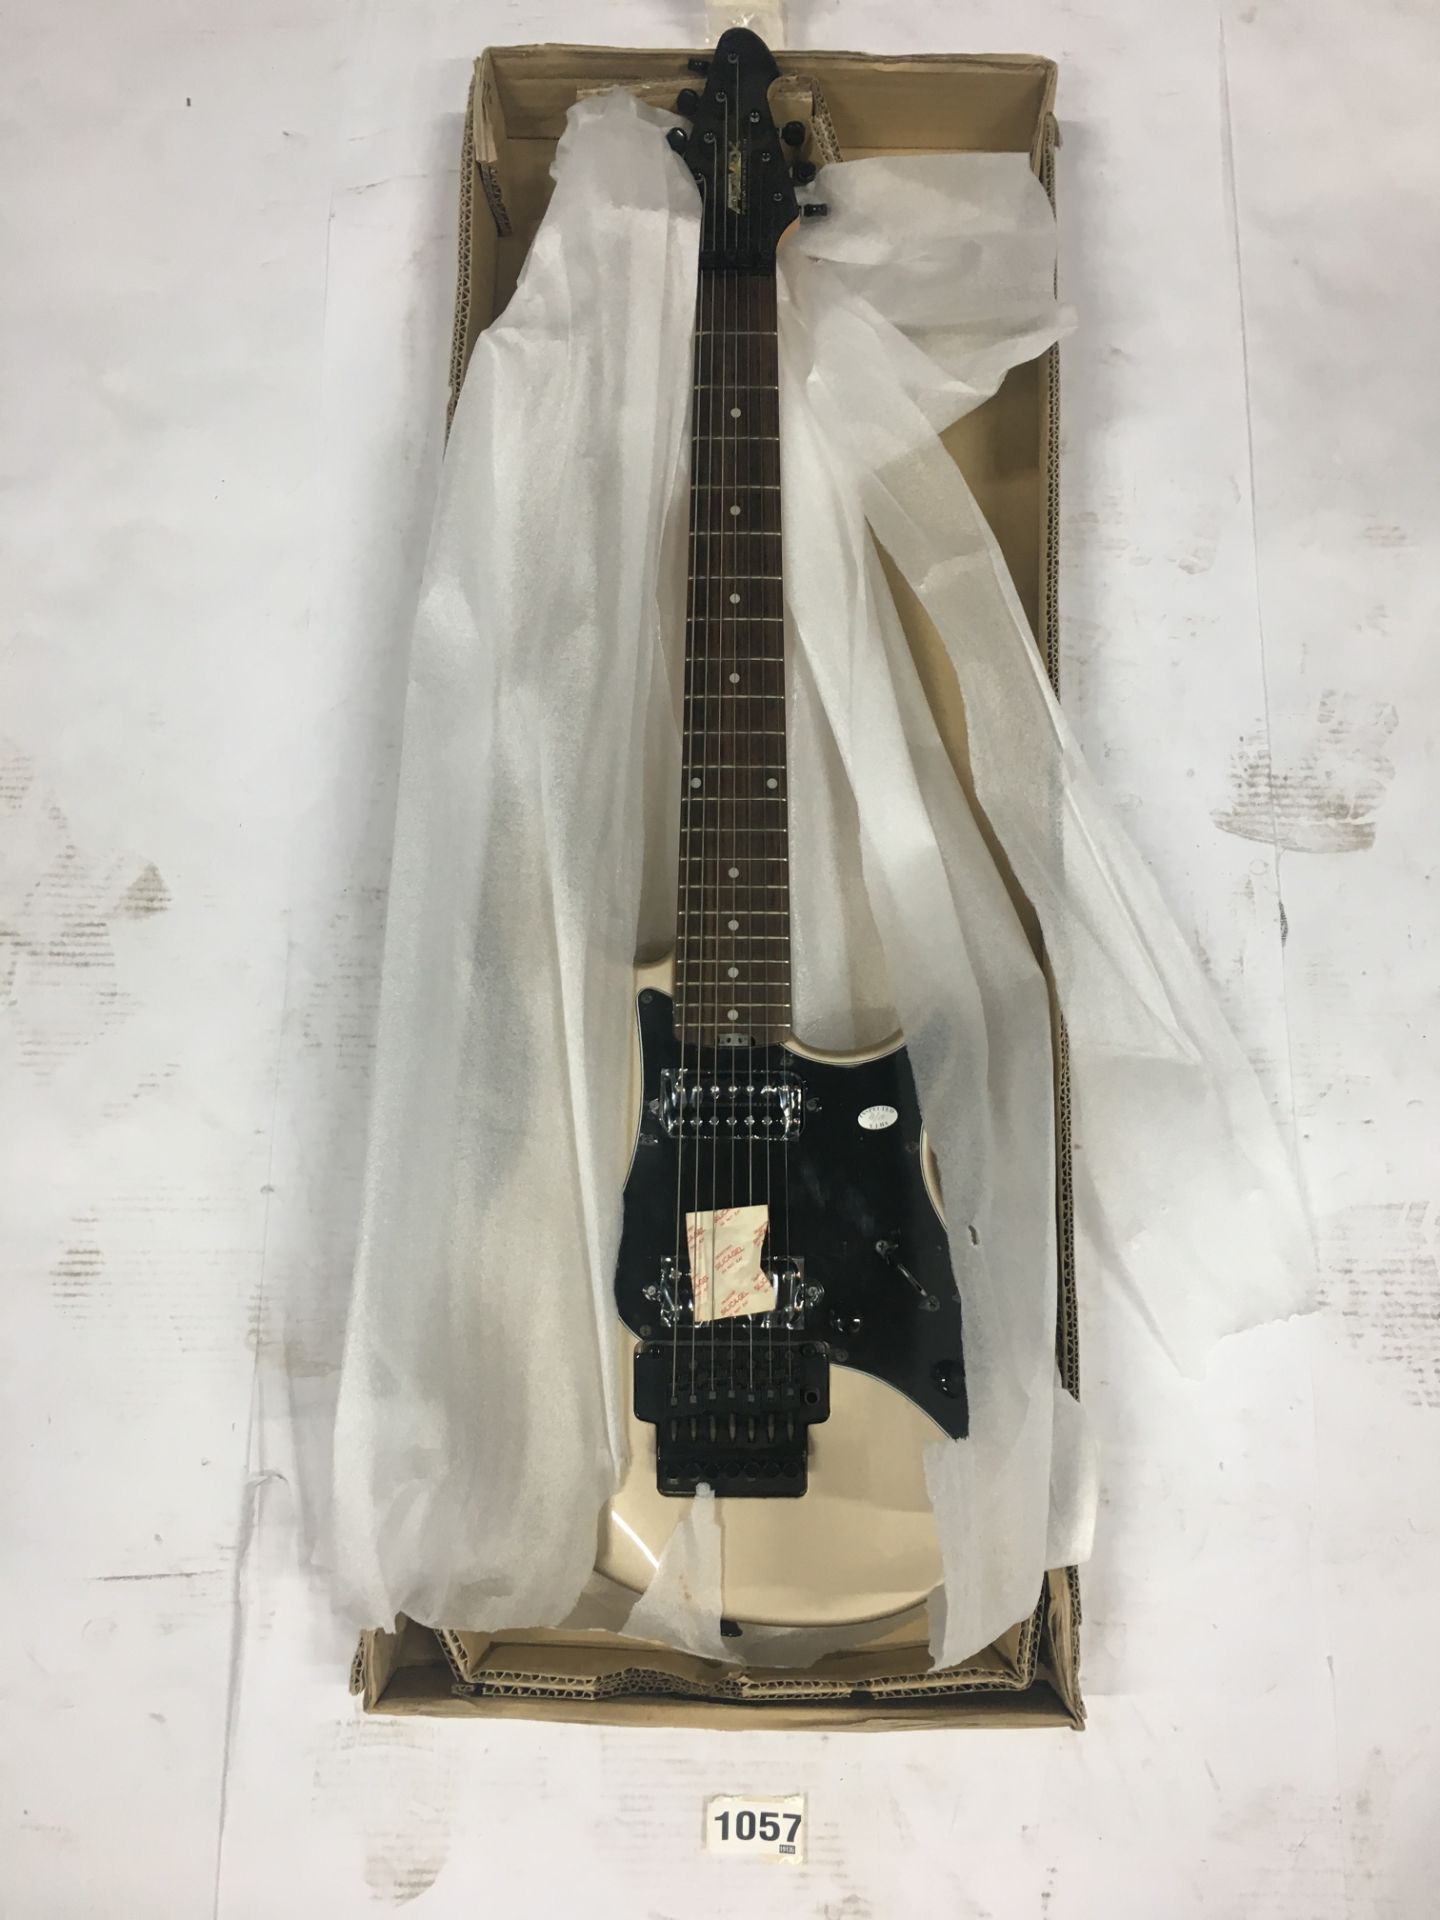 Peavey Predator Plus TR7 Electric Guitar | In Box | Used - Image 2 of 3